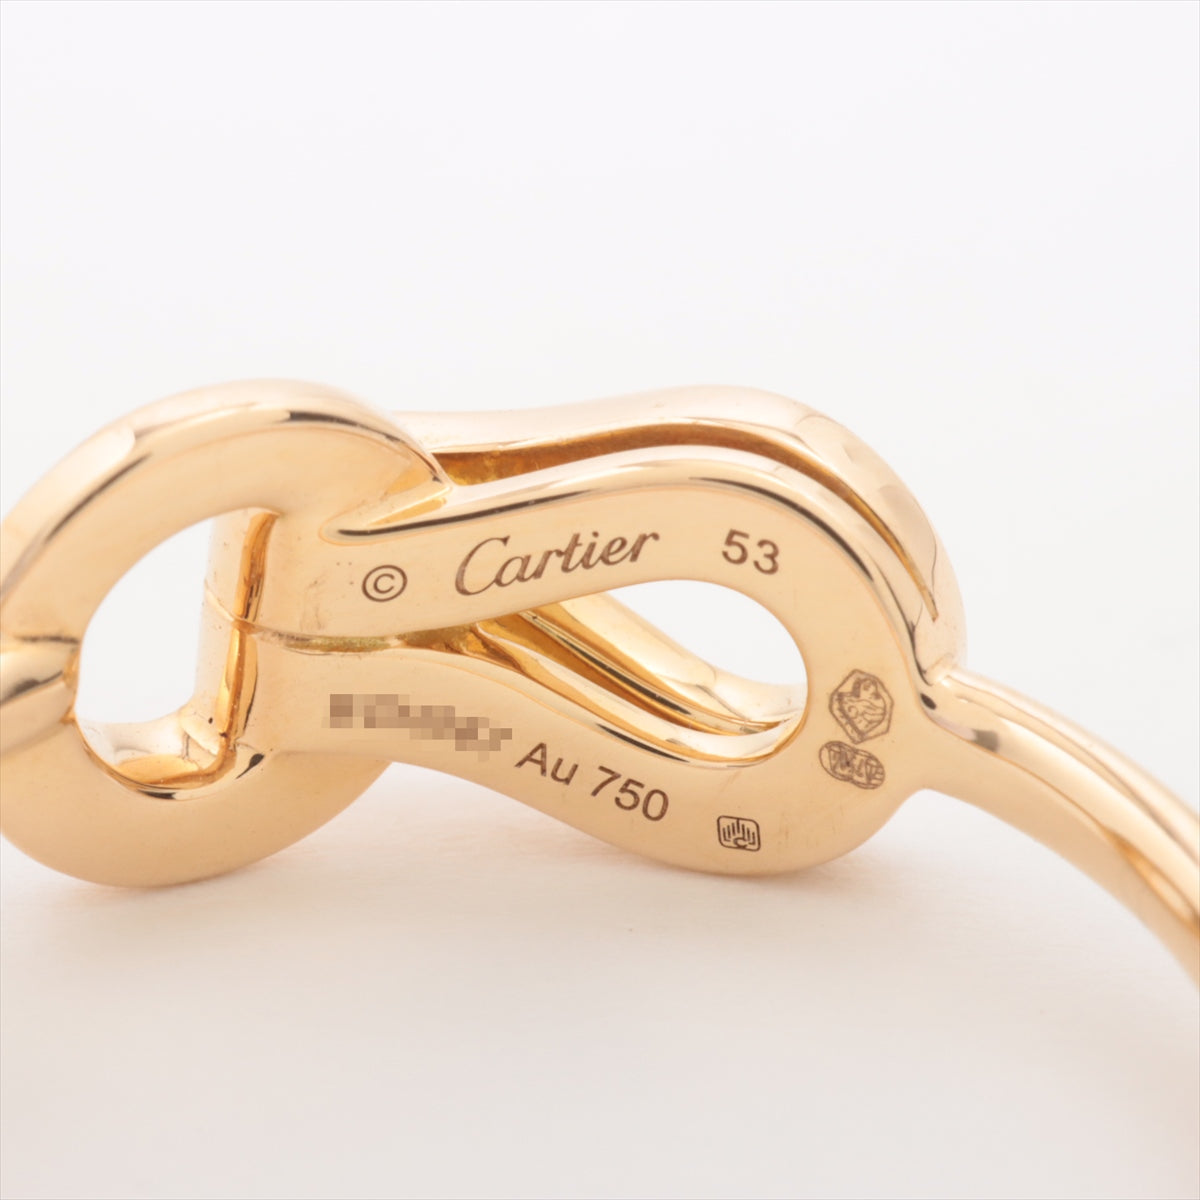 Cartier Agraph diamond ring 750 (PG) 2.6g 53 E.L.U